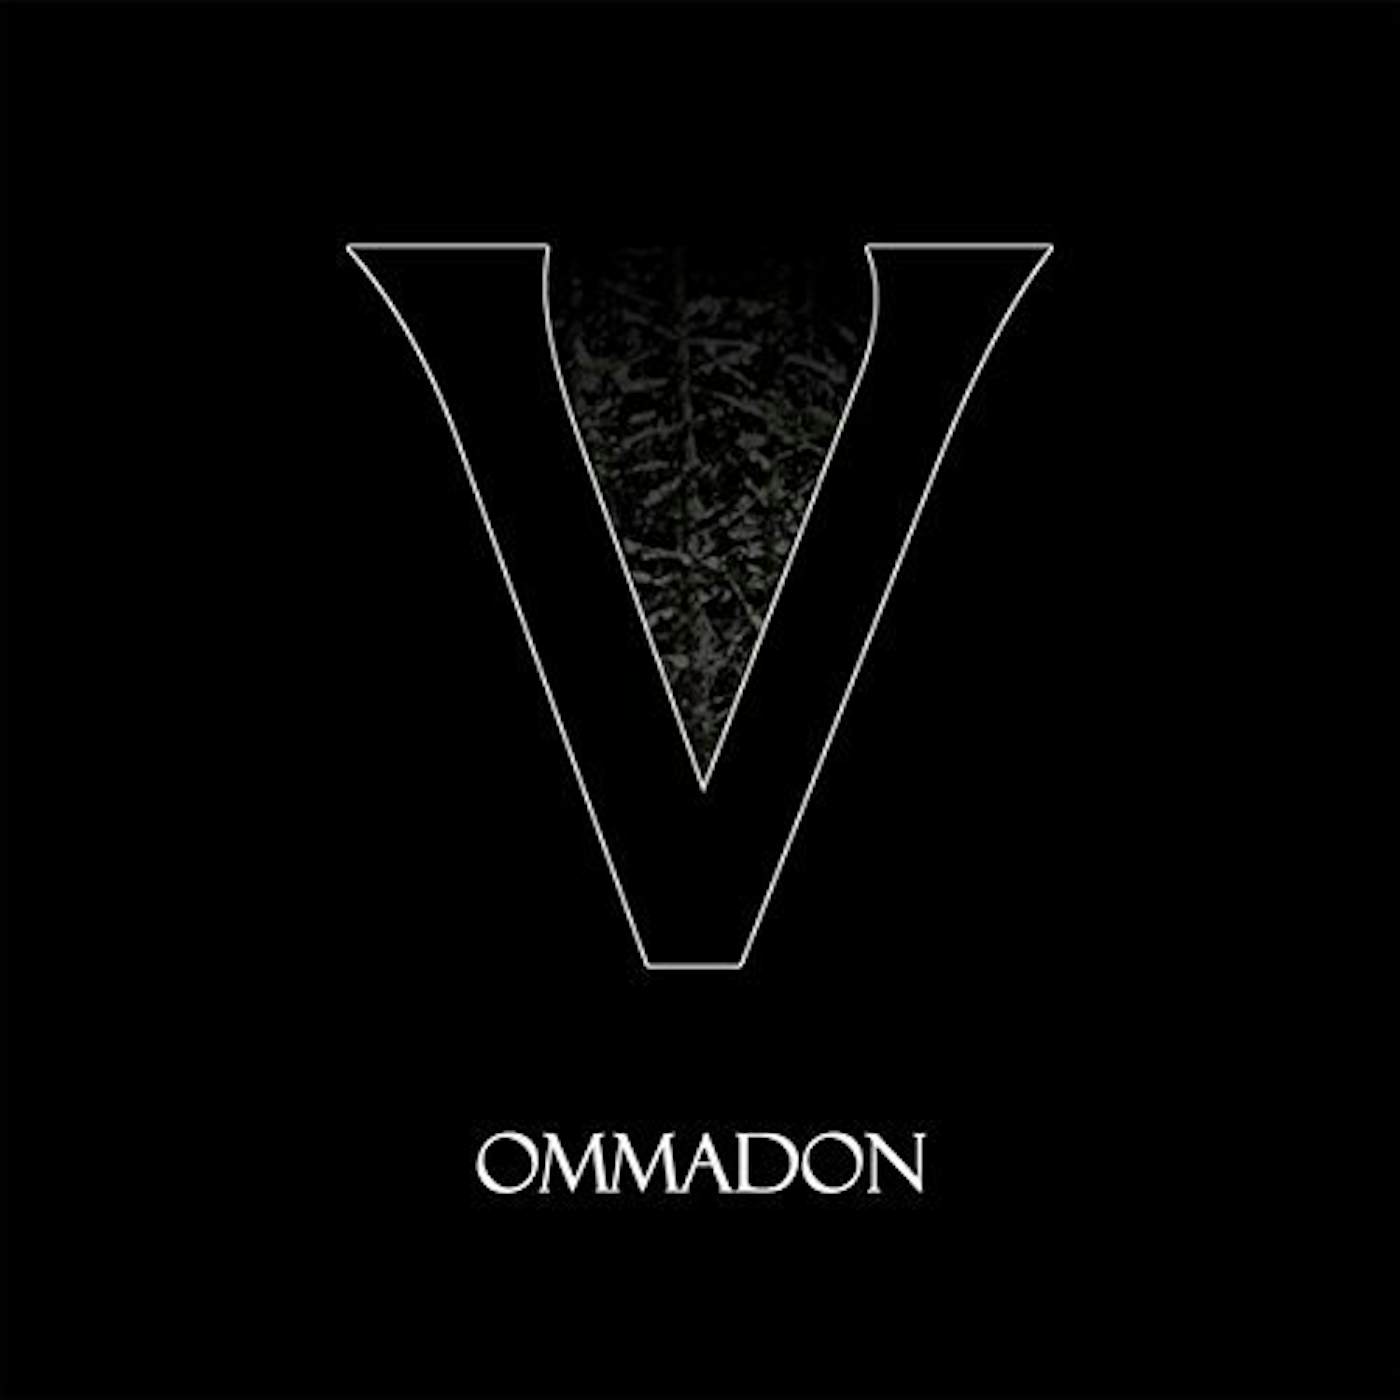 Ommadon V Vinyl Record